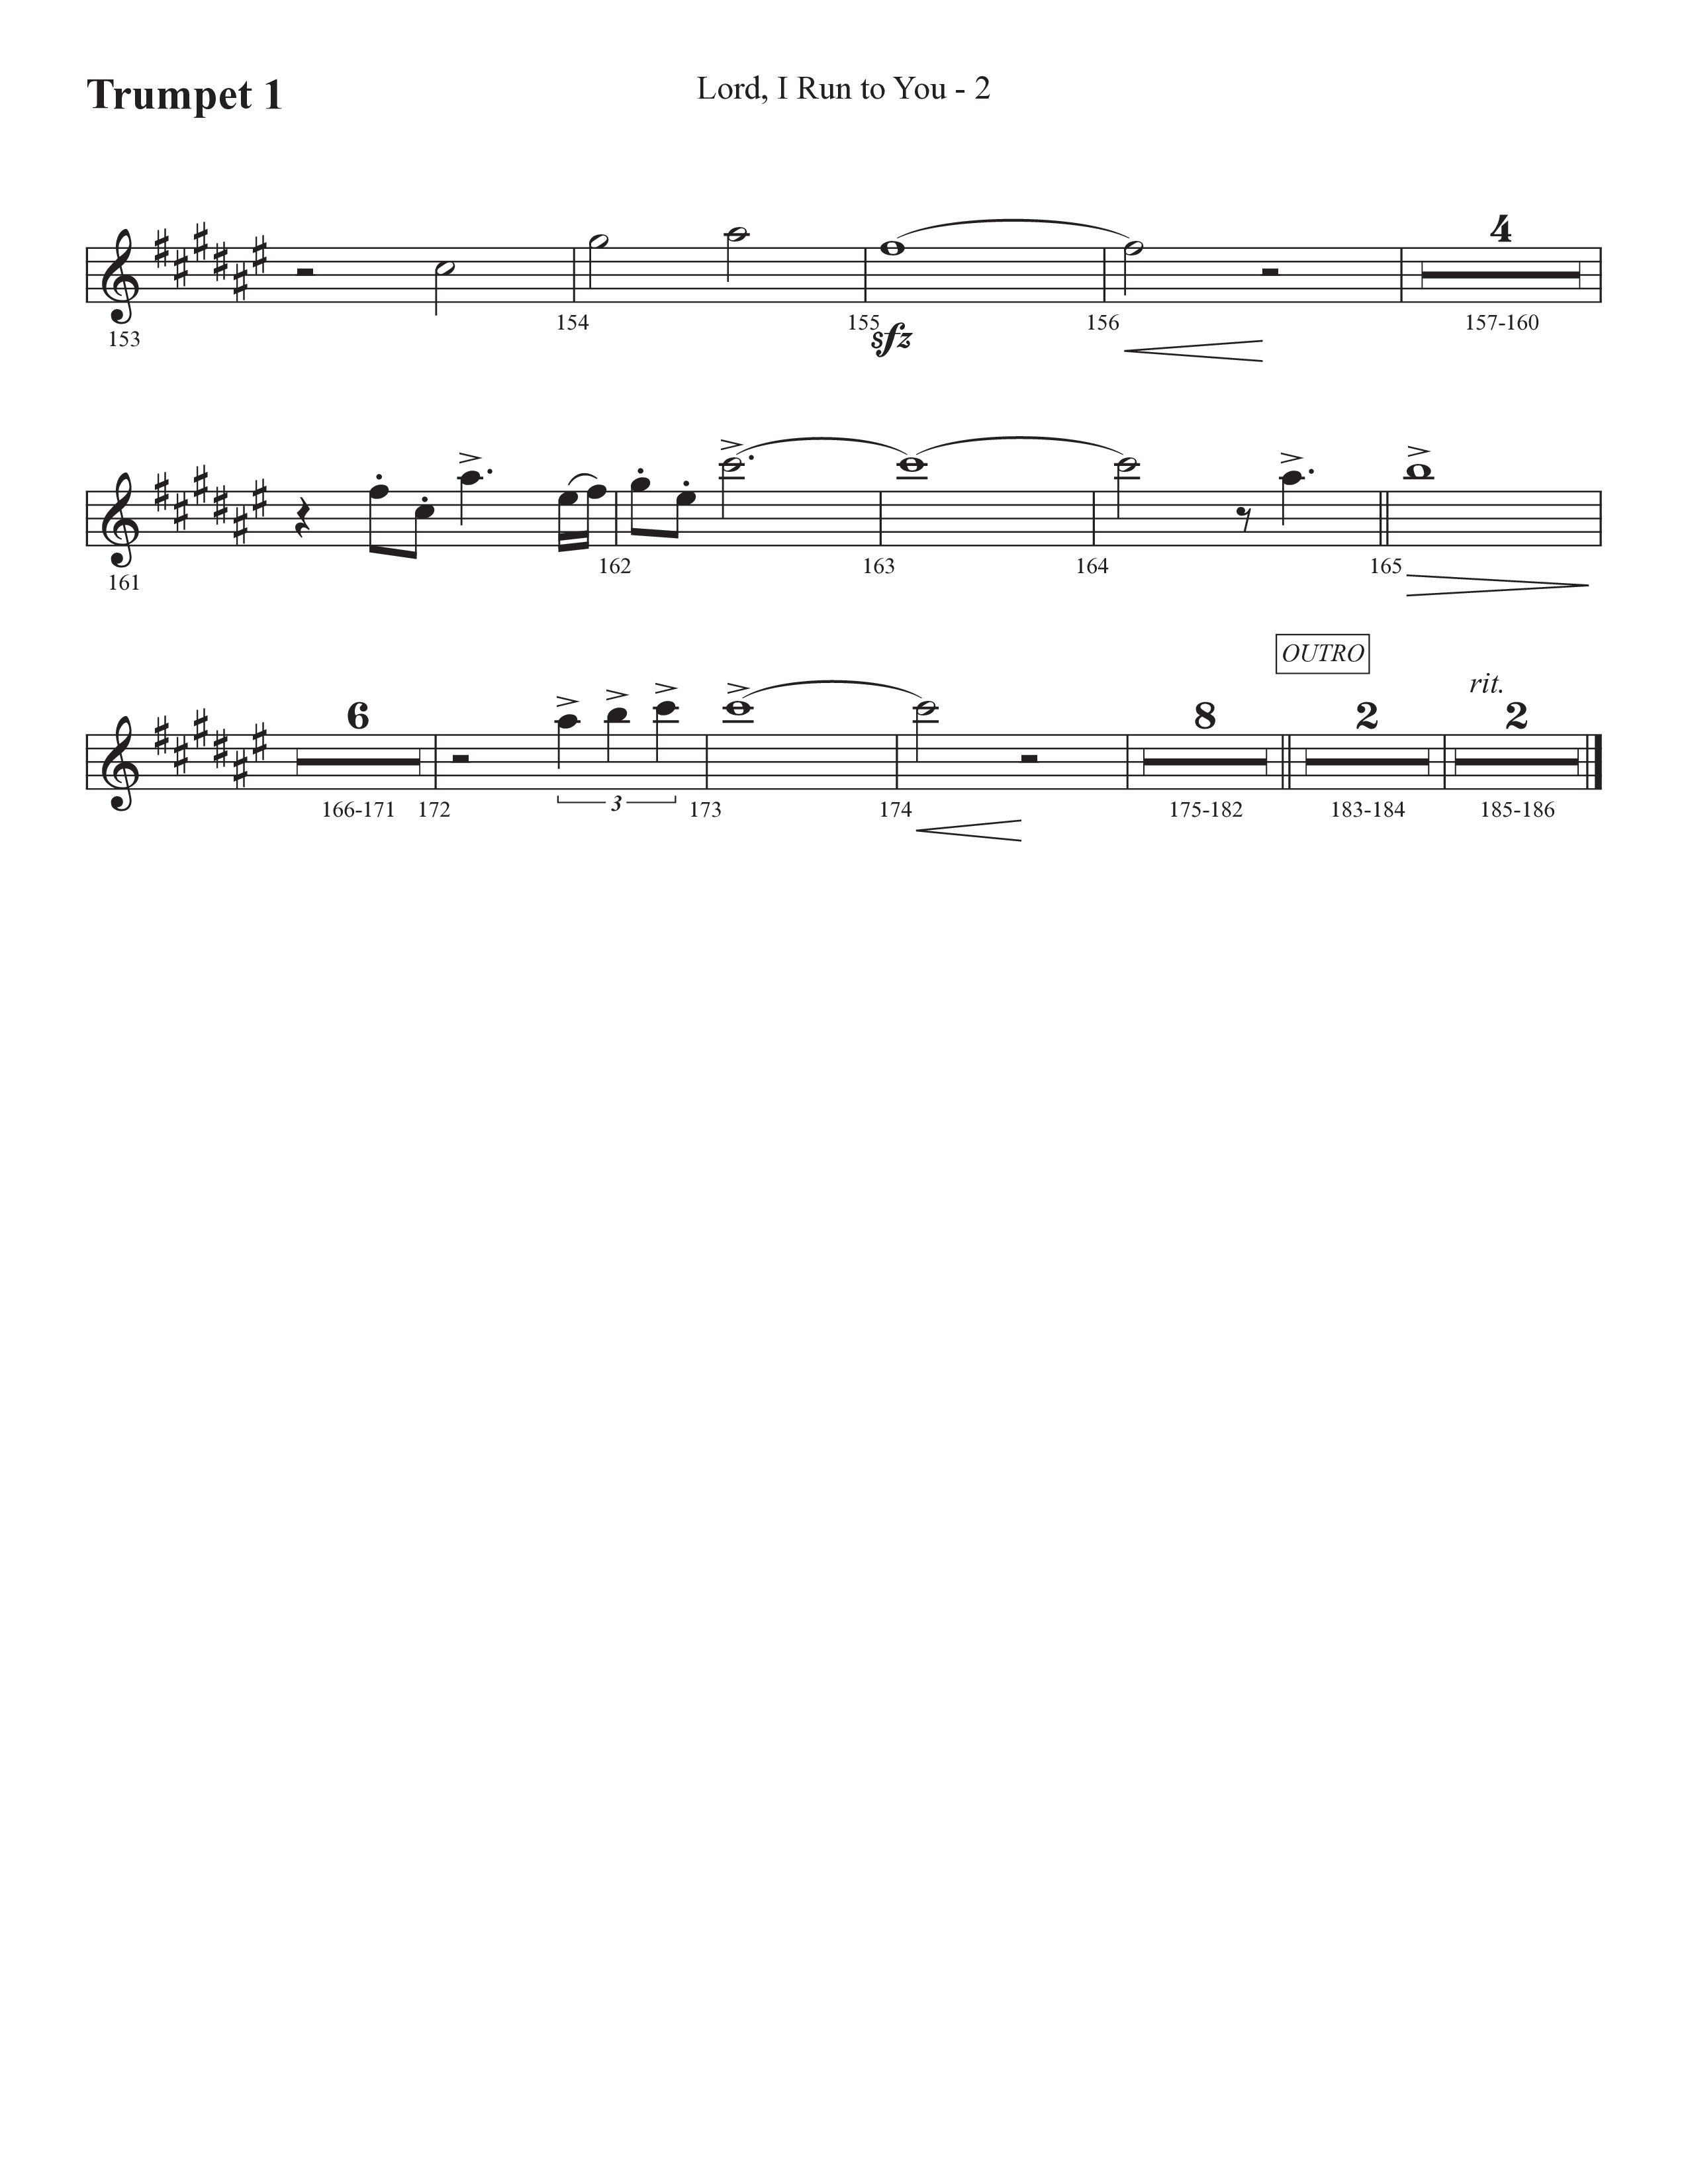 Lord I Run To You (Choral Anthem SATB) Trumpet 1 (Prestonwood Worship / Prestonwood Choir / Arr. Michael Neale / Arr. Carson Wagner)